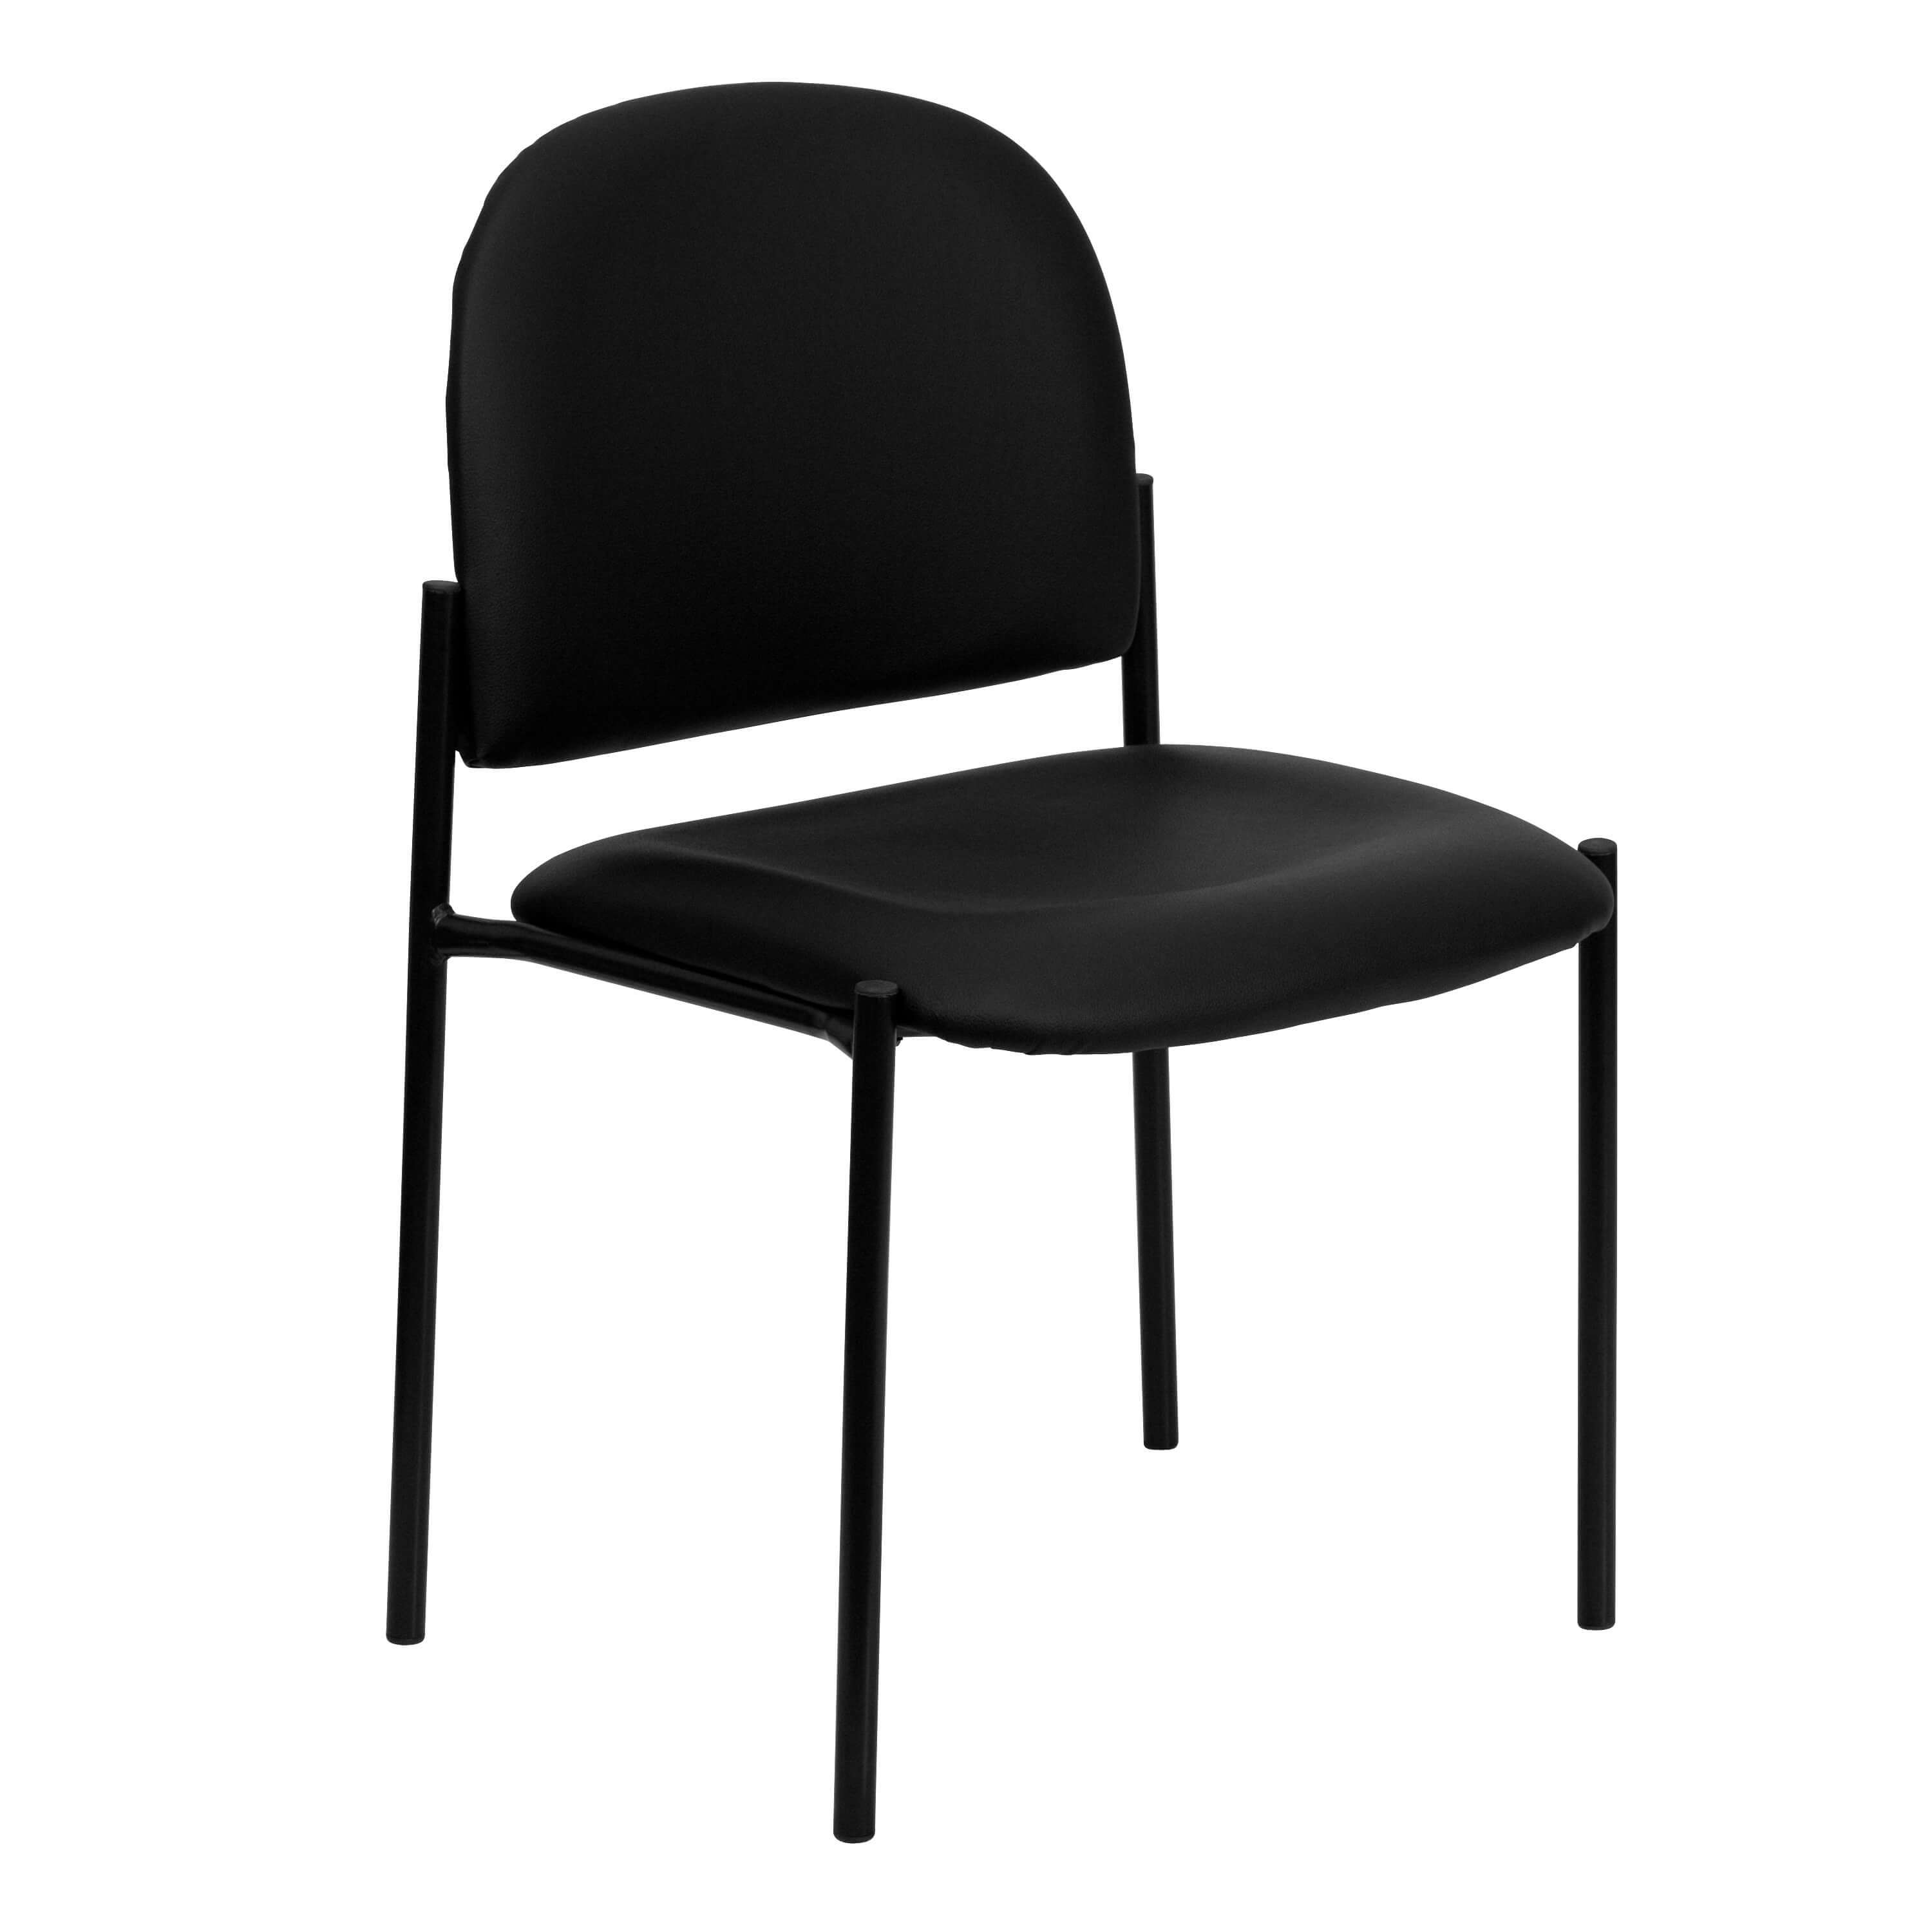 Stackable chairs CUB BT 515 1 VINYL GG FLA